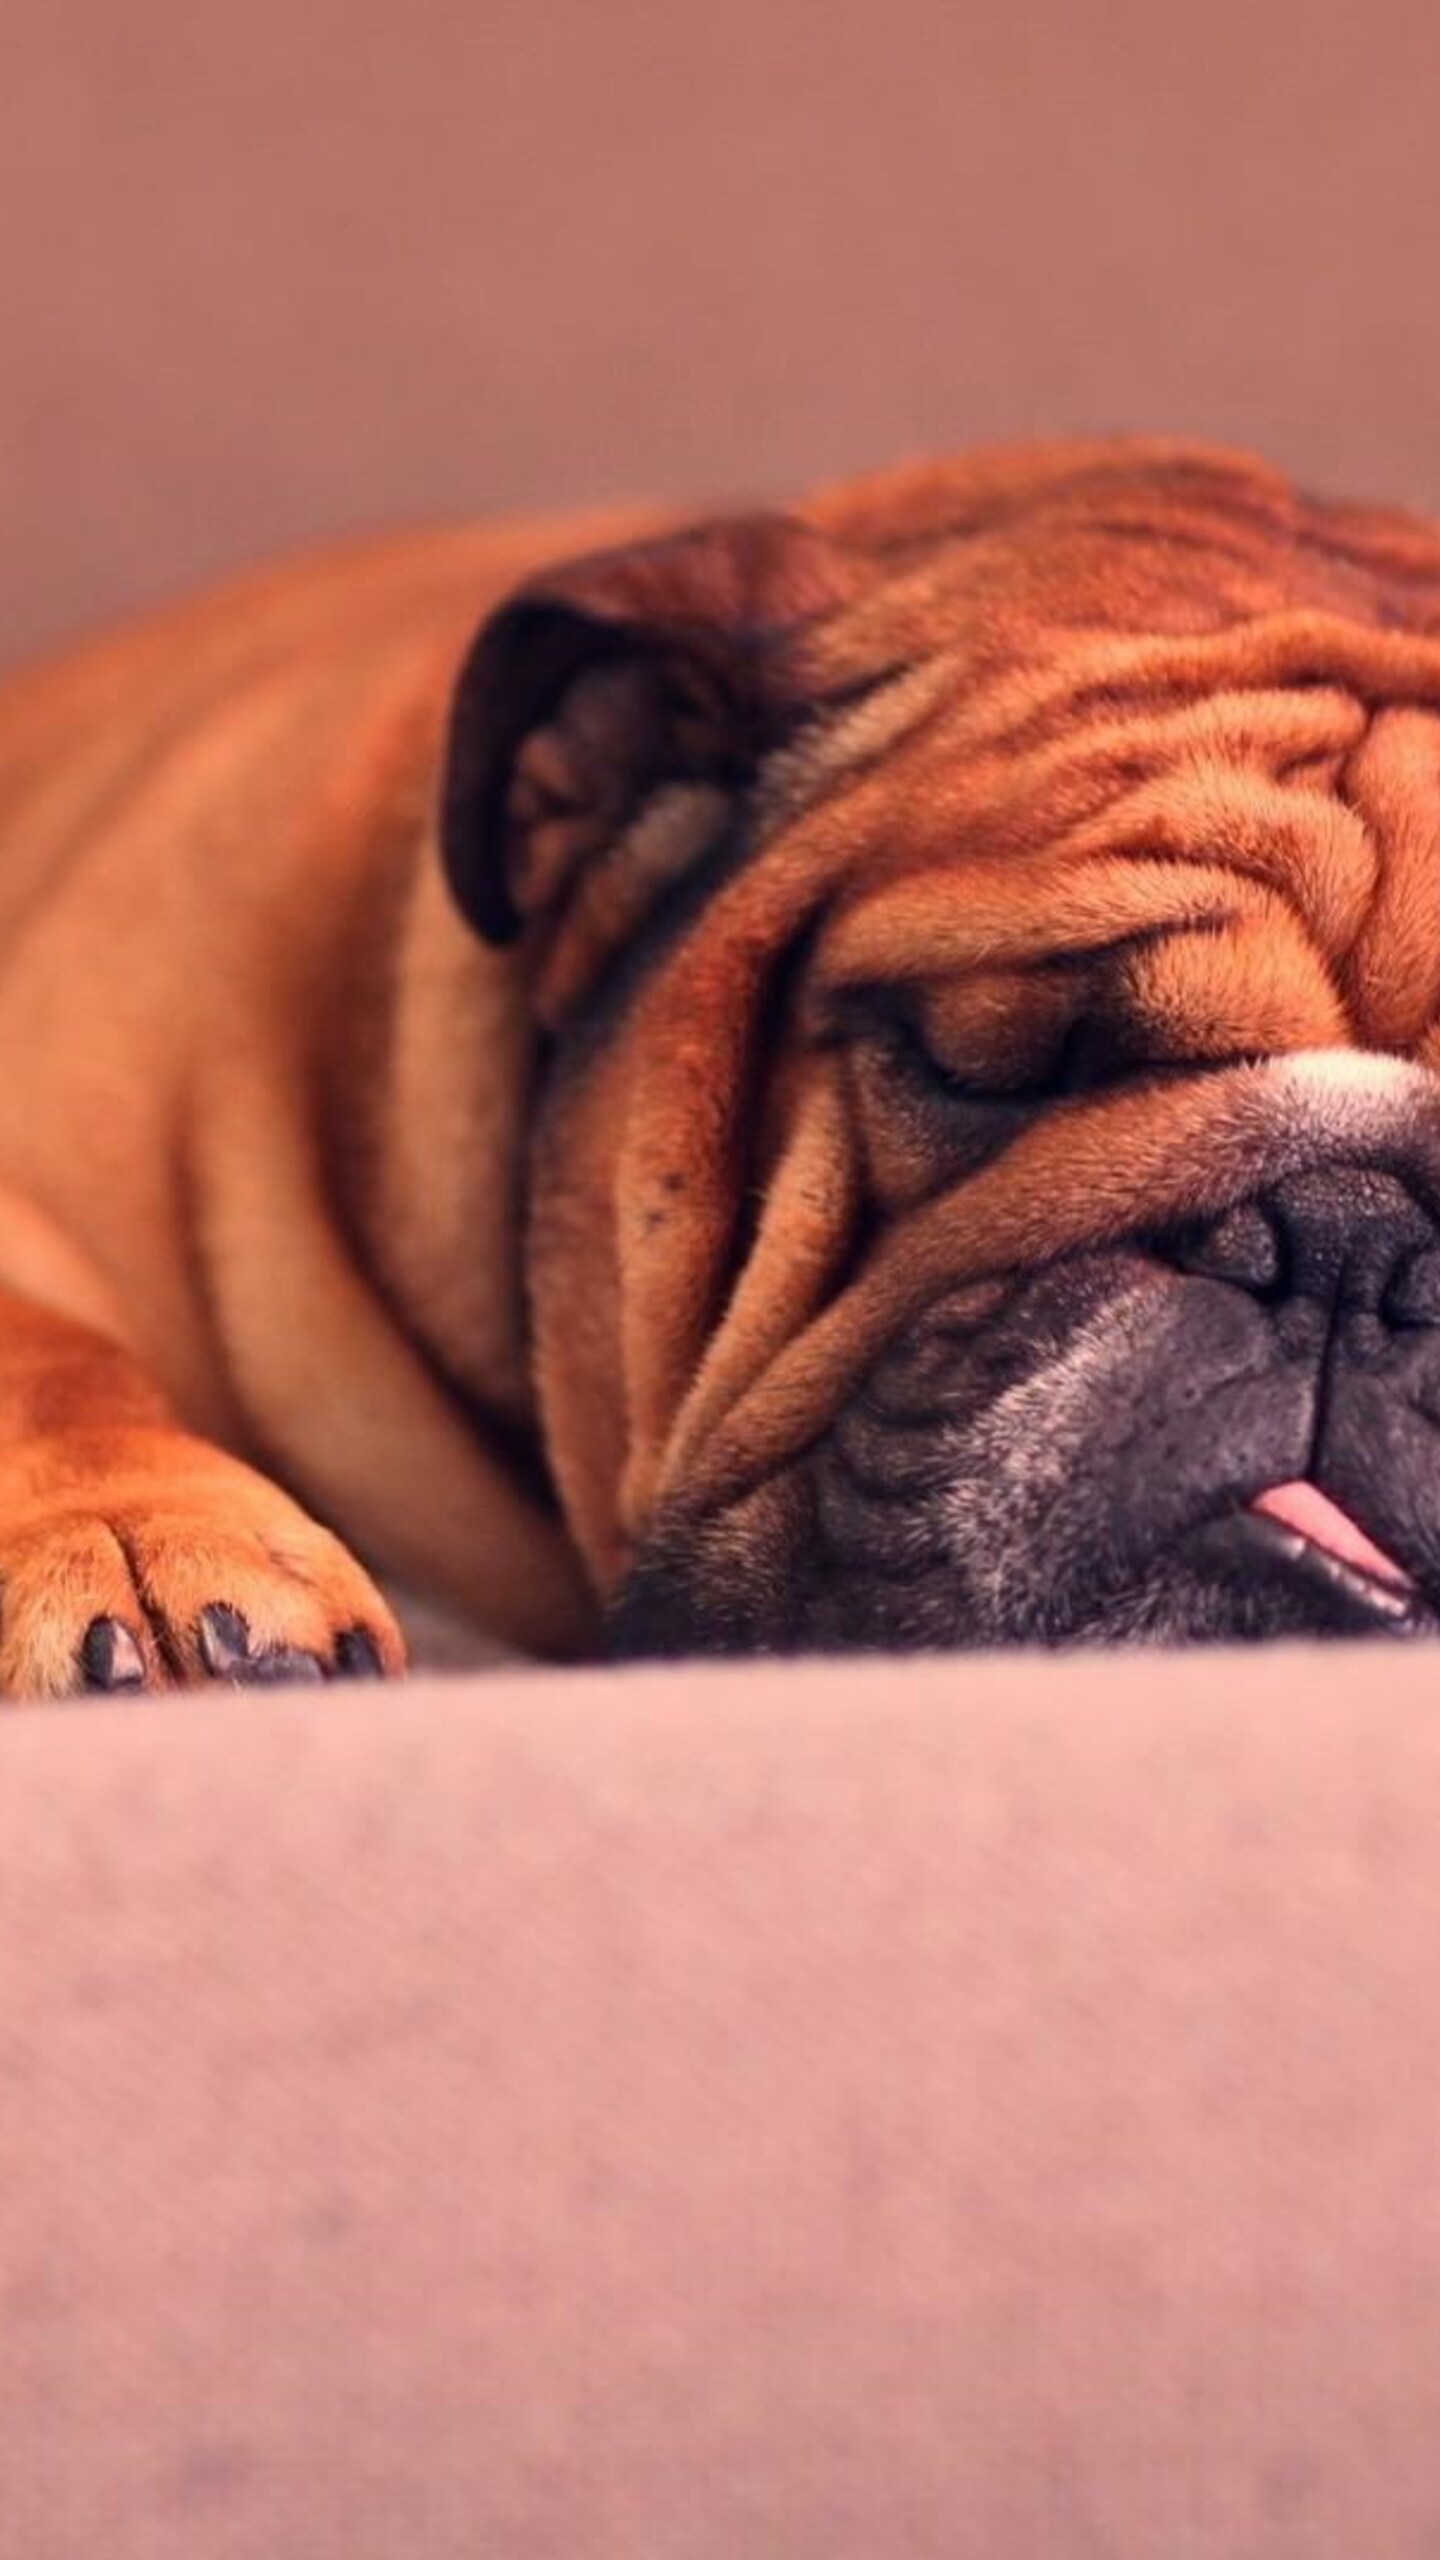 bull-dog-sleeping-image.jpg